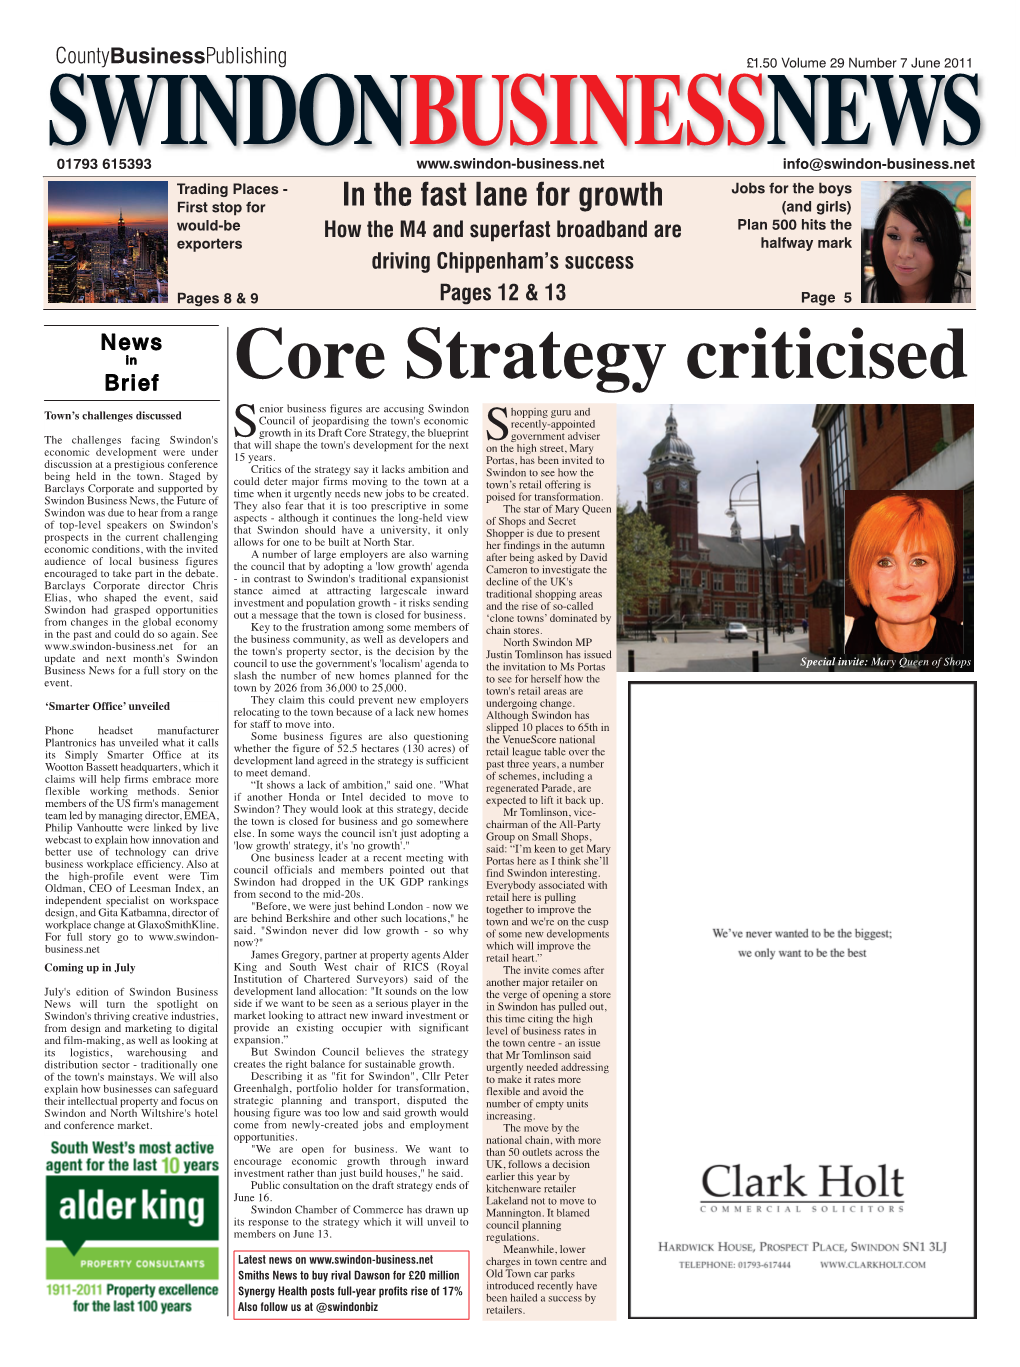 Core Strategy Criticised